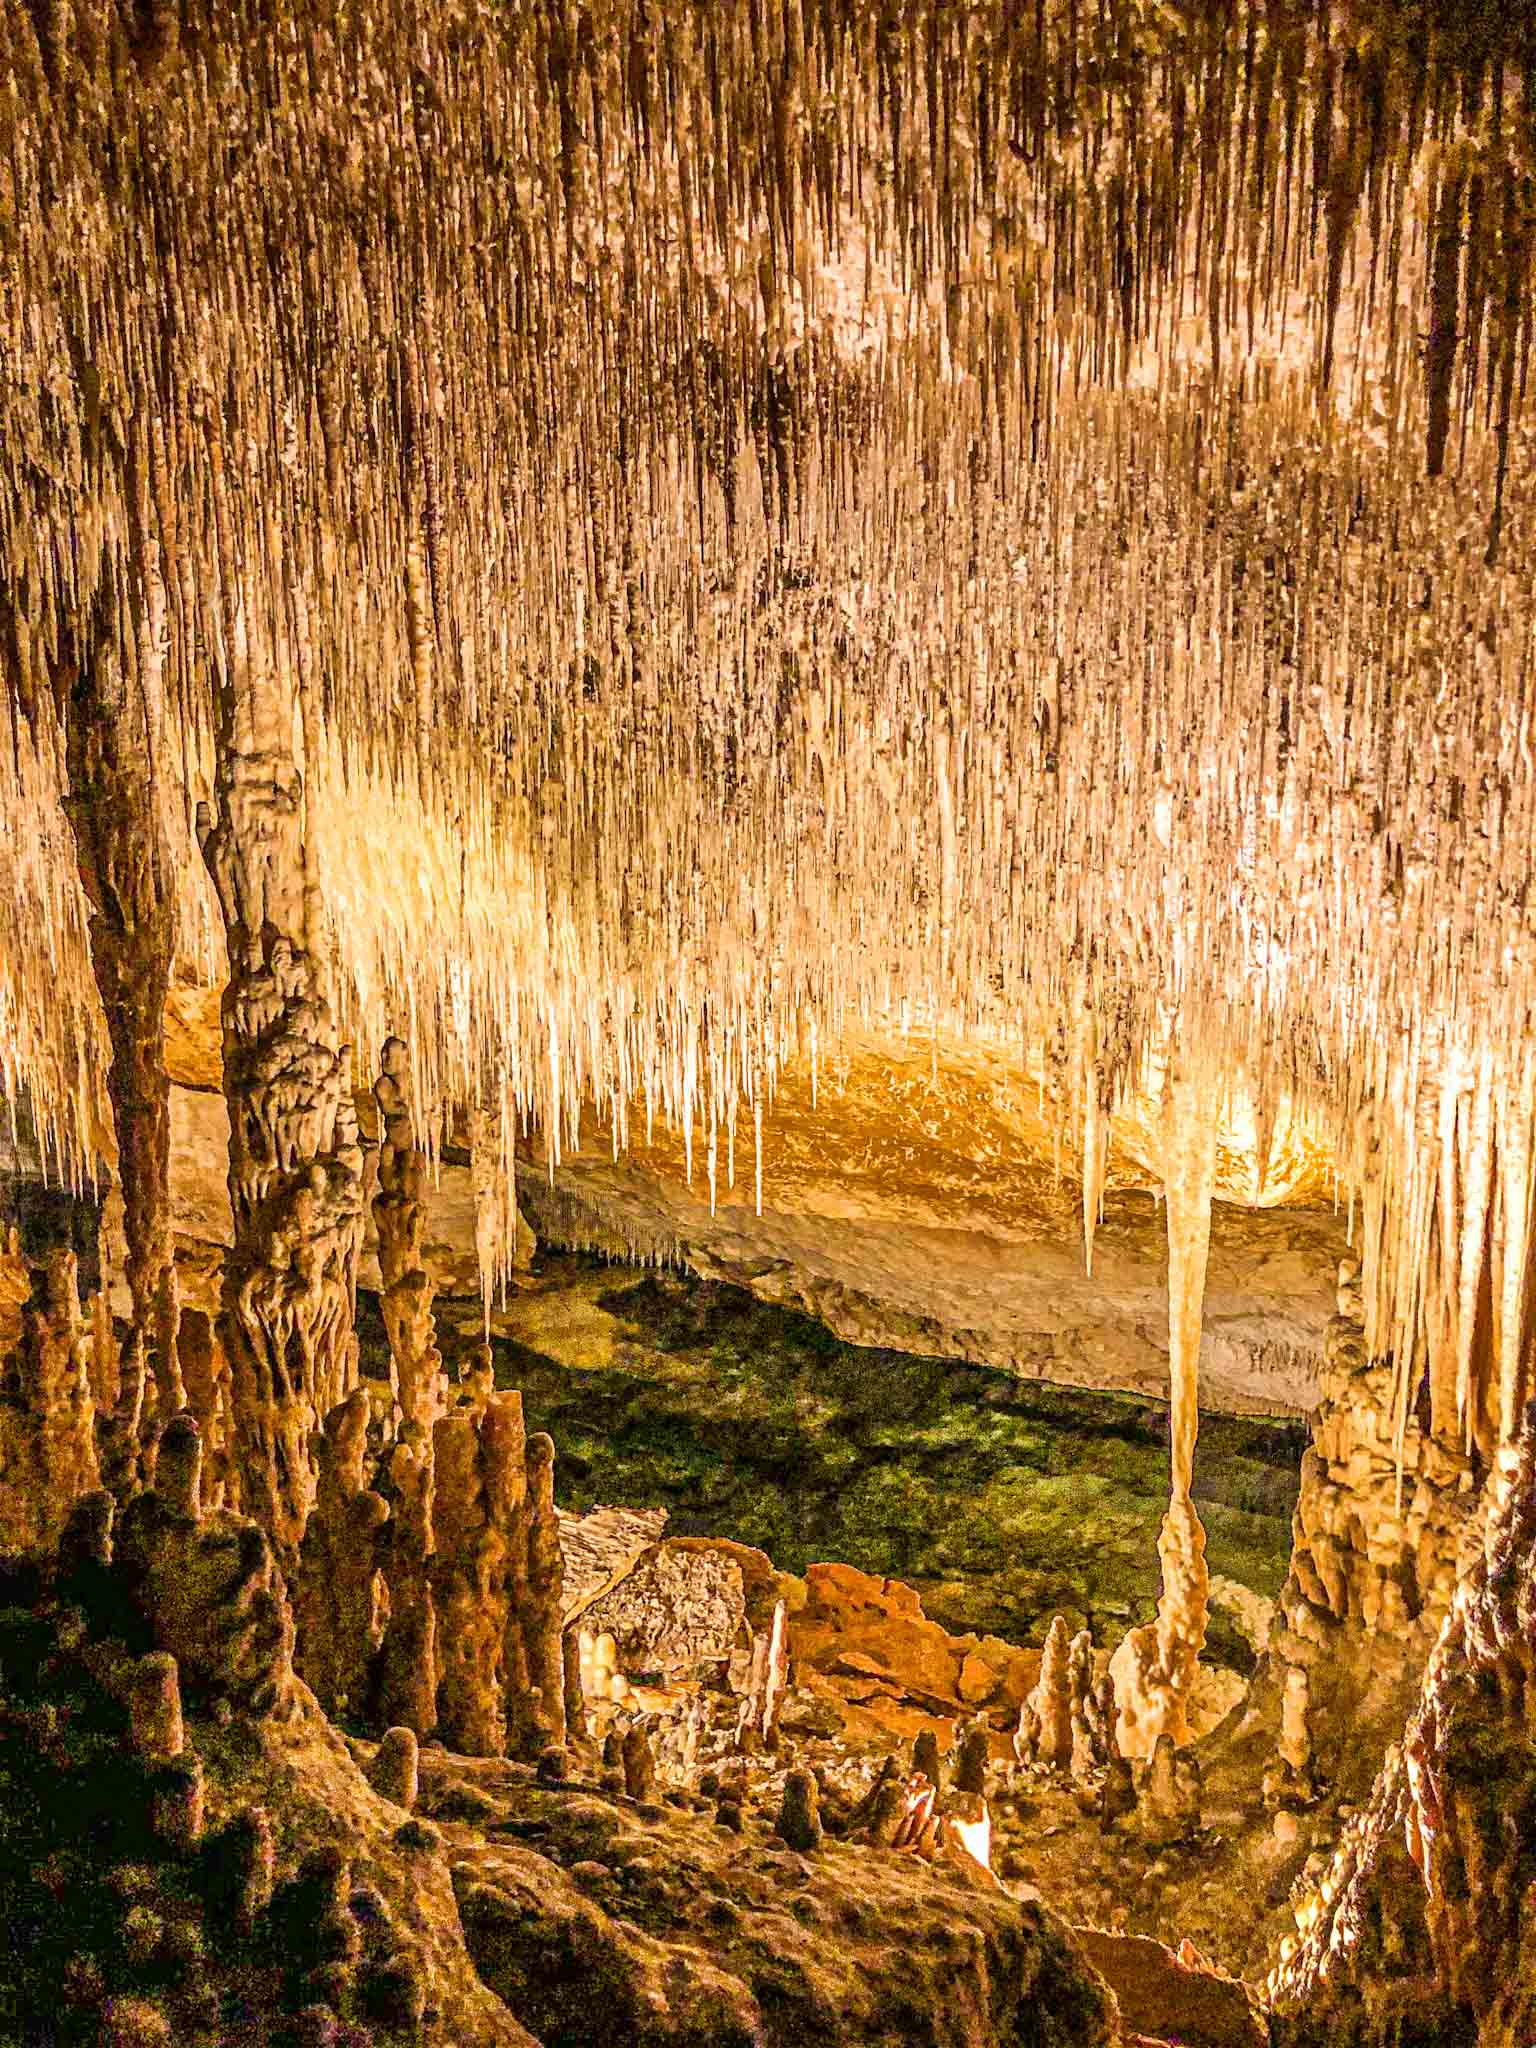 Cuevas del Drach in Mallorca